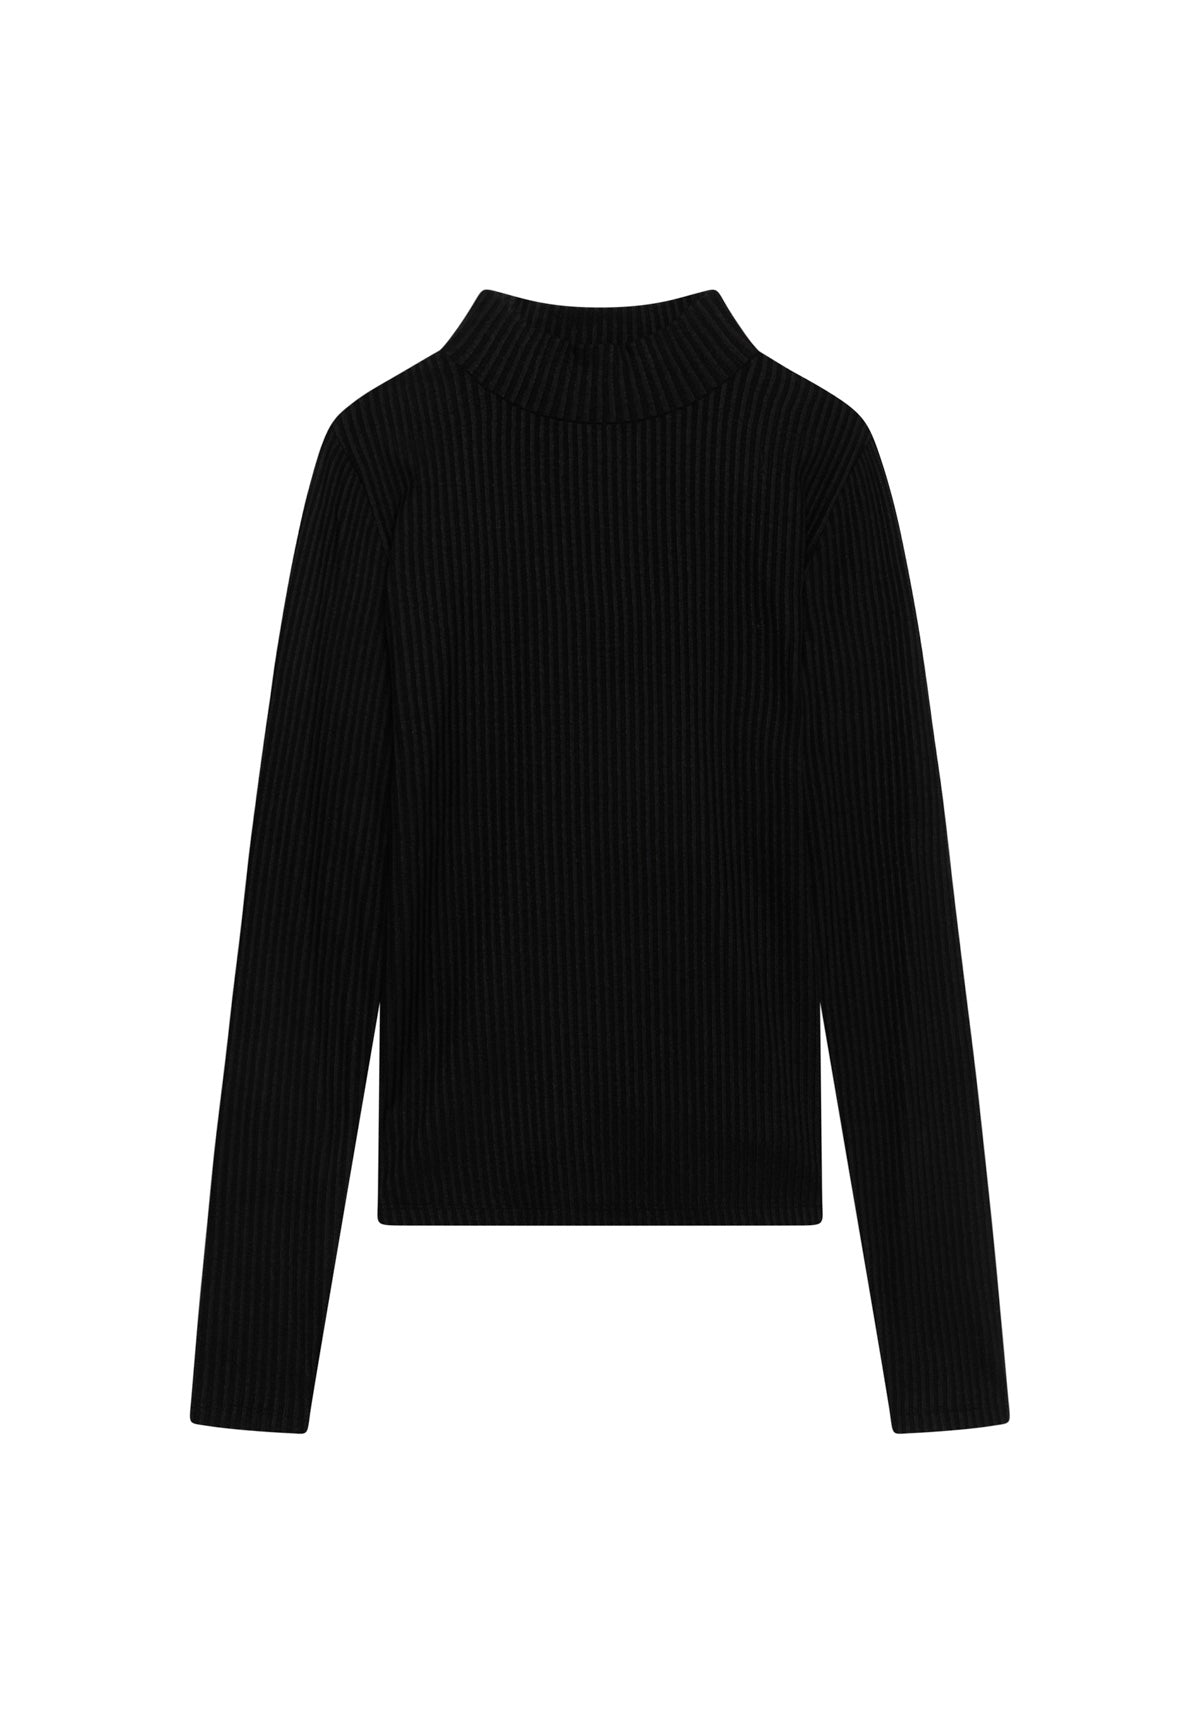 Long-sleeved shirt DIMAYA in black by LOVJOI made of TENCEL™